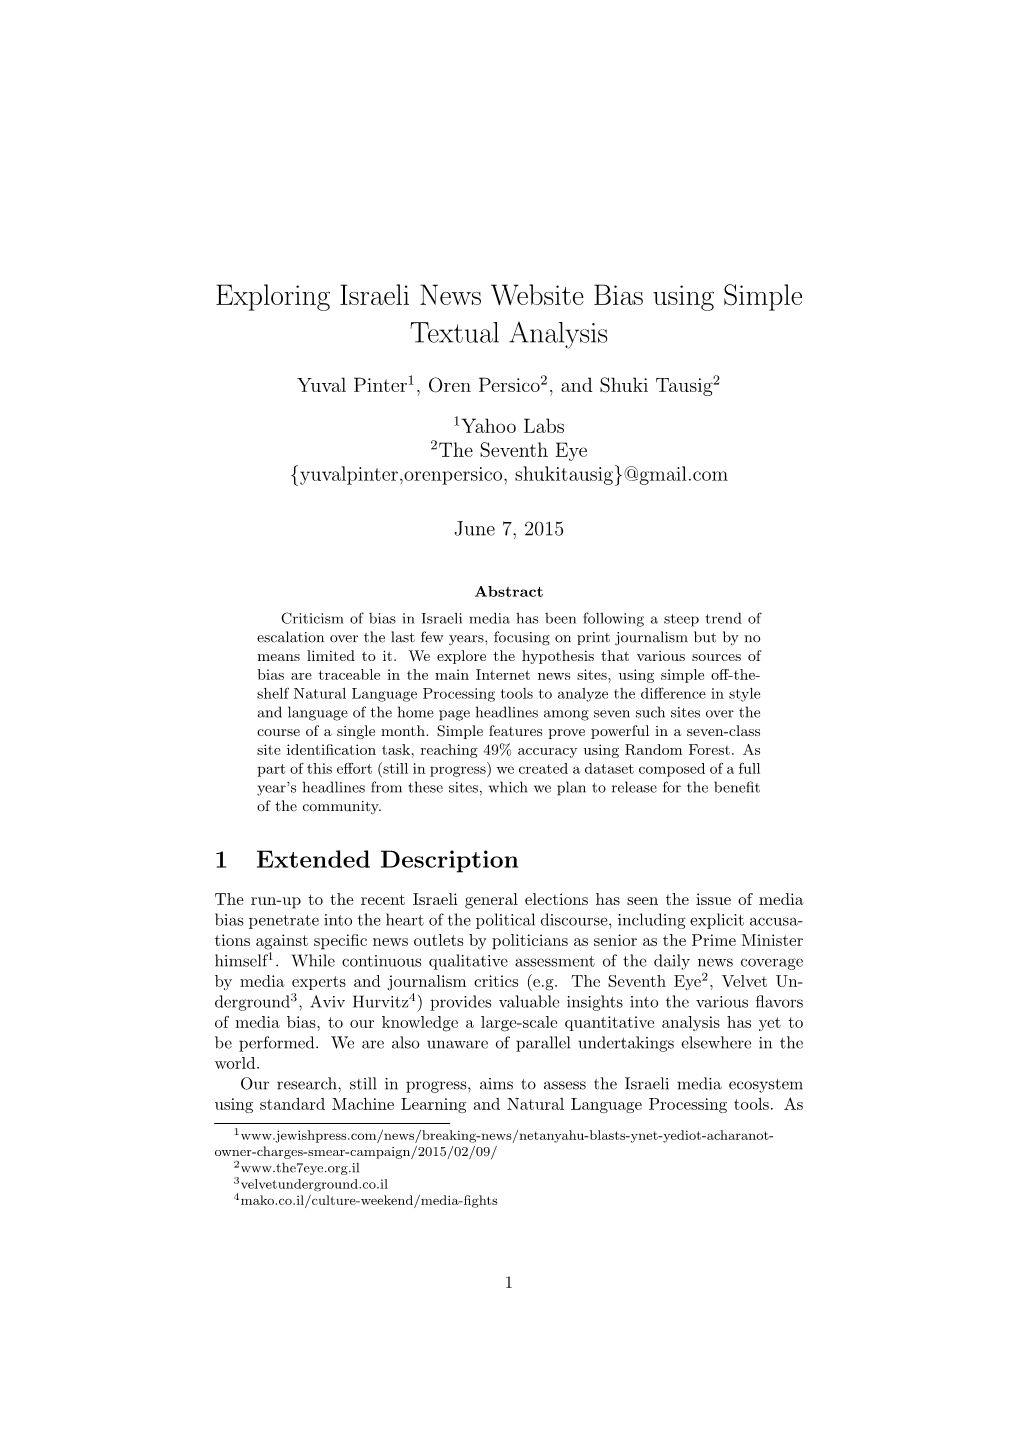 Exploring Israeli News Website Bias Using Simple Textual Analysis